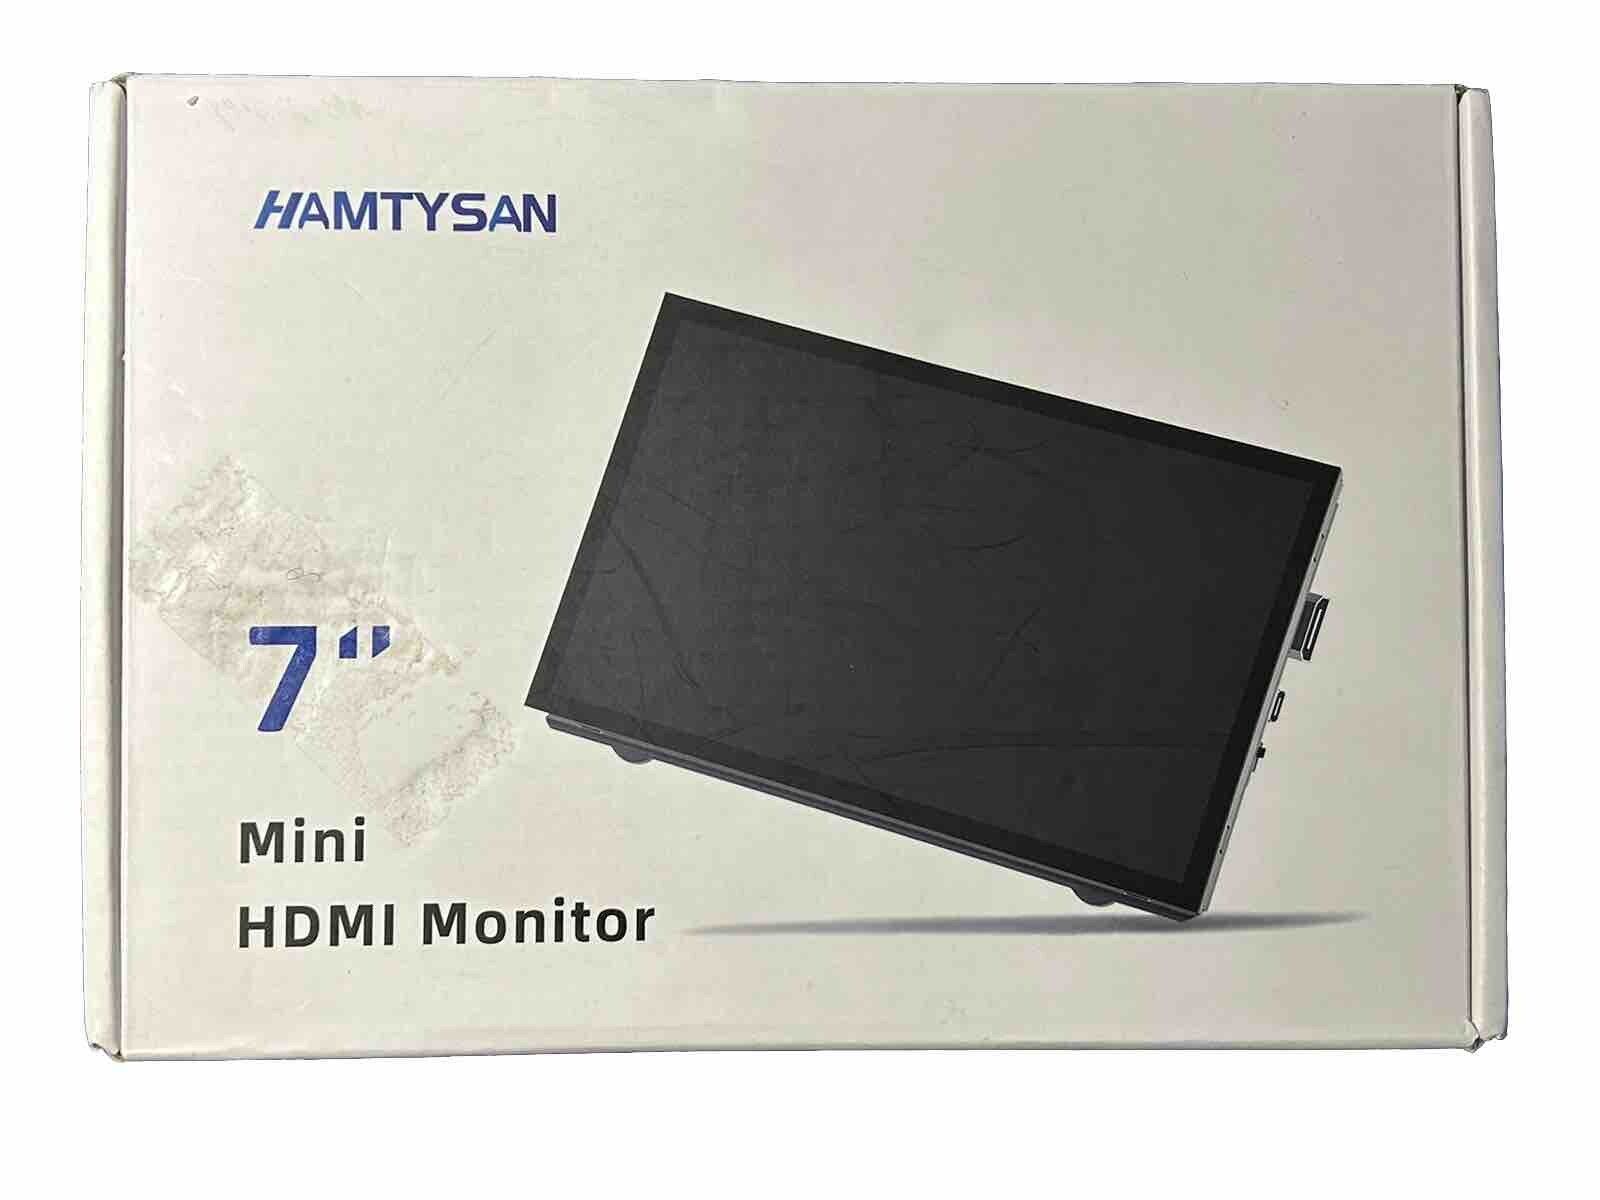 Hamtysan 7 Inch HDMI Universal Portable Monitor - Tested Working